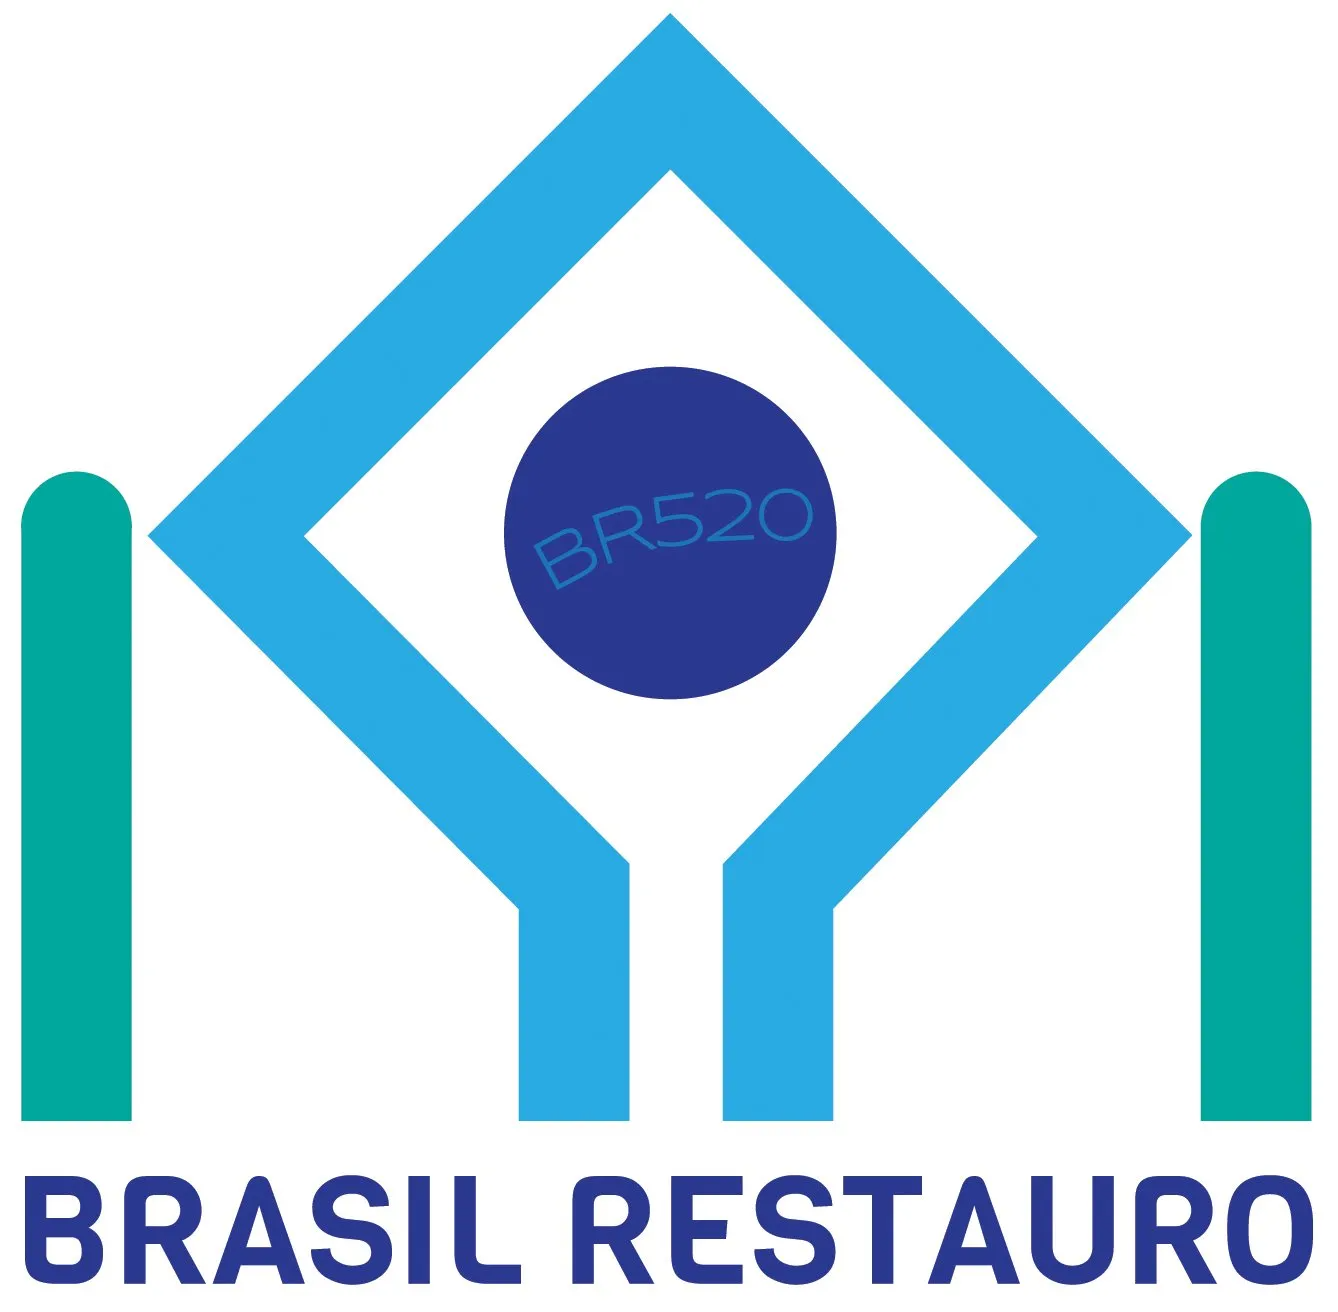 logotipo_Brasil_Restauro